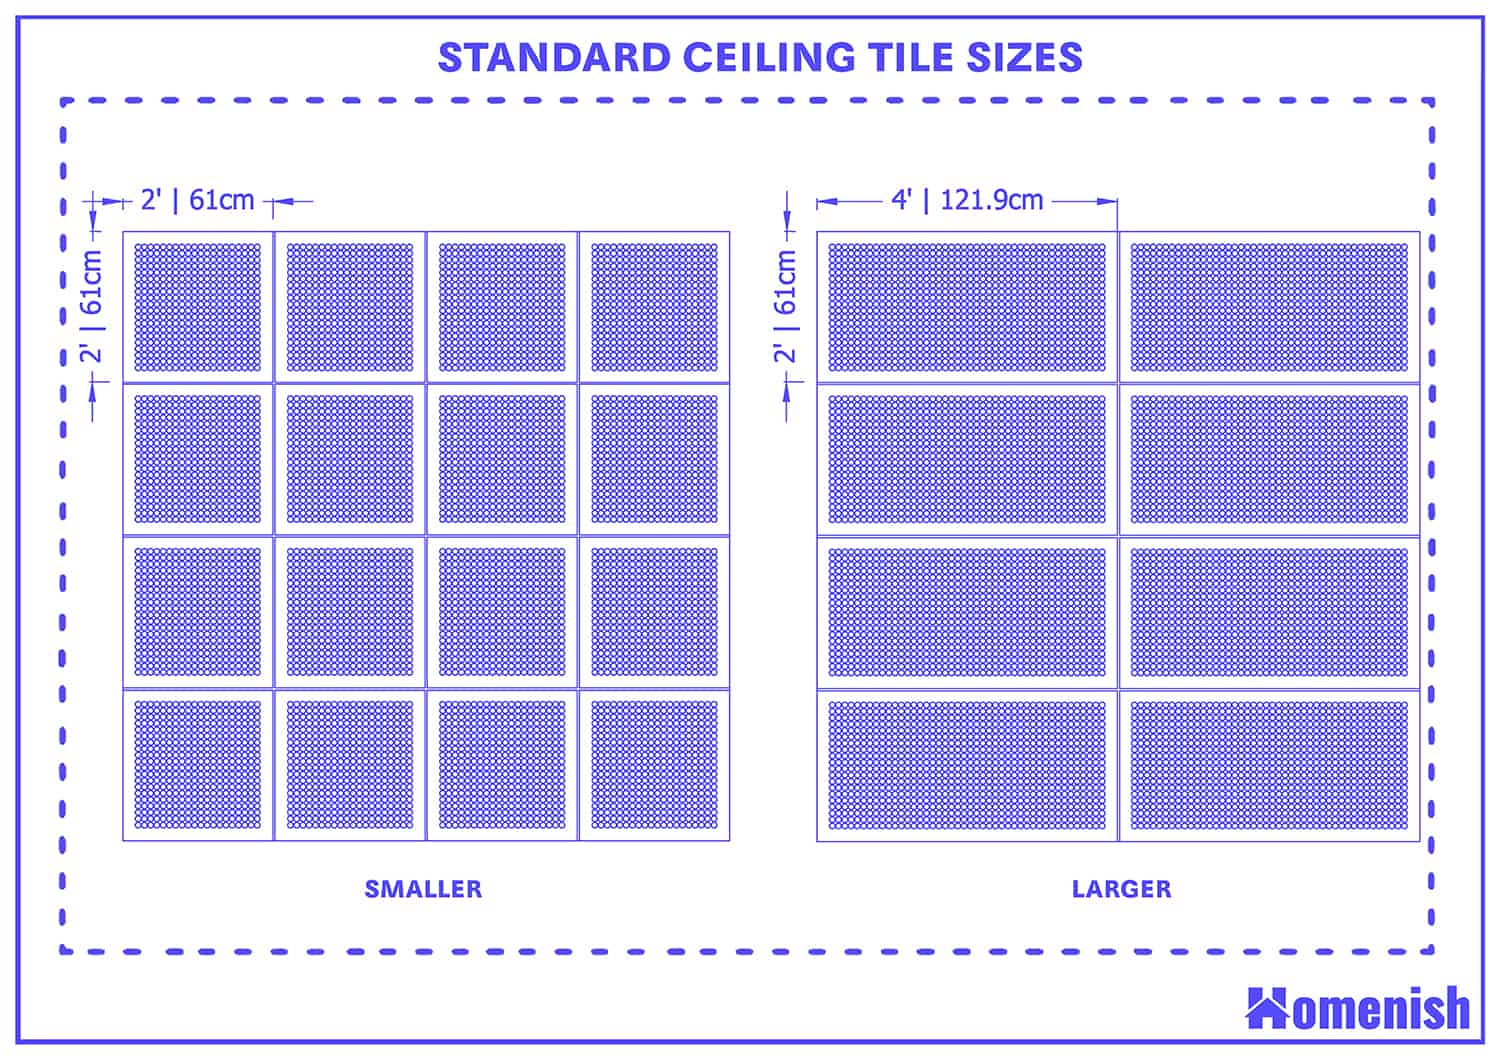 Standard ceiling tile sizes